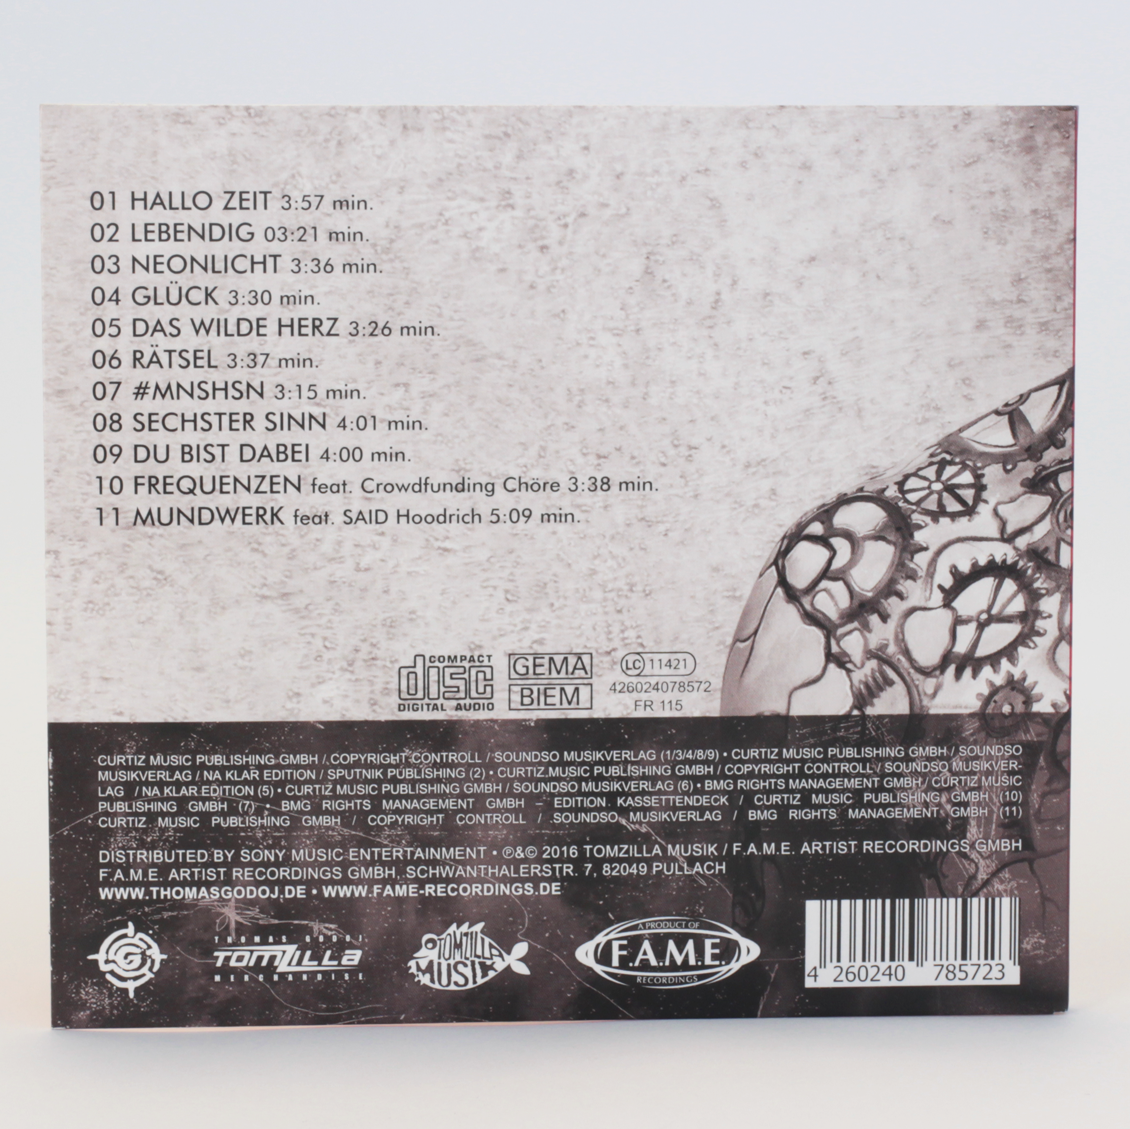 CD "Mundwerk" - Standard Version (2016)